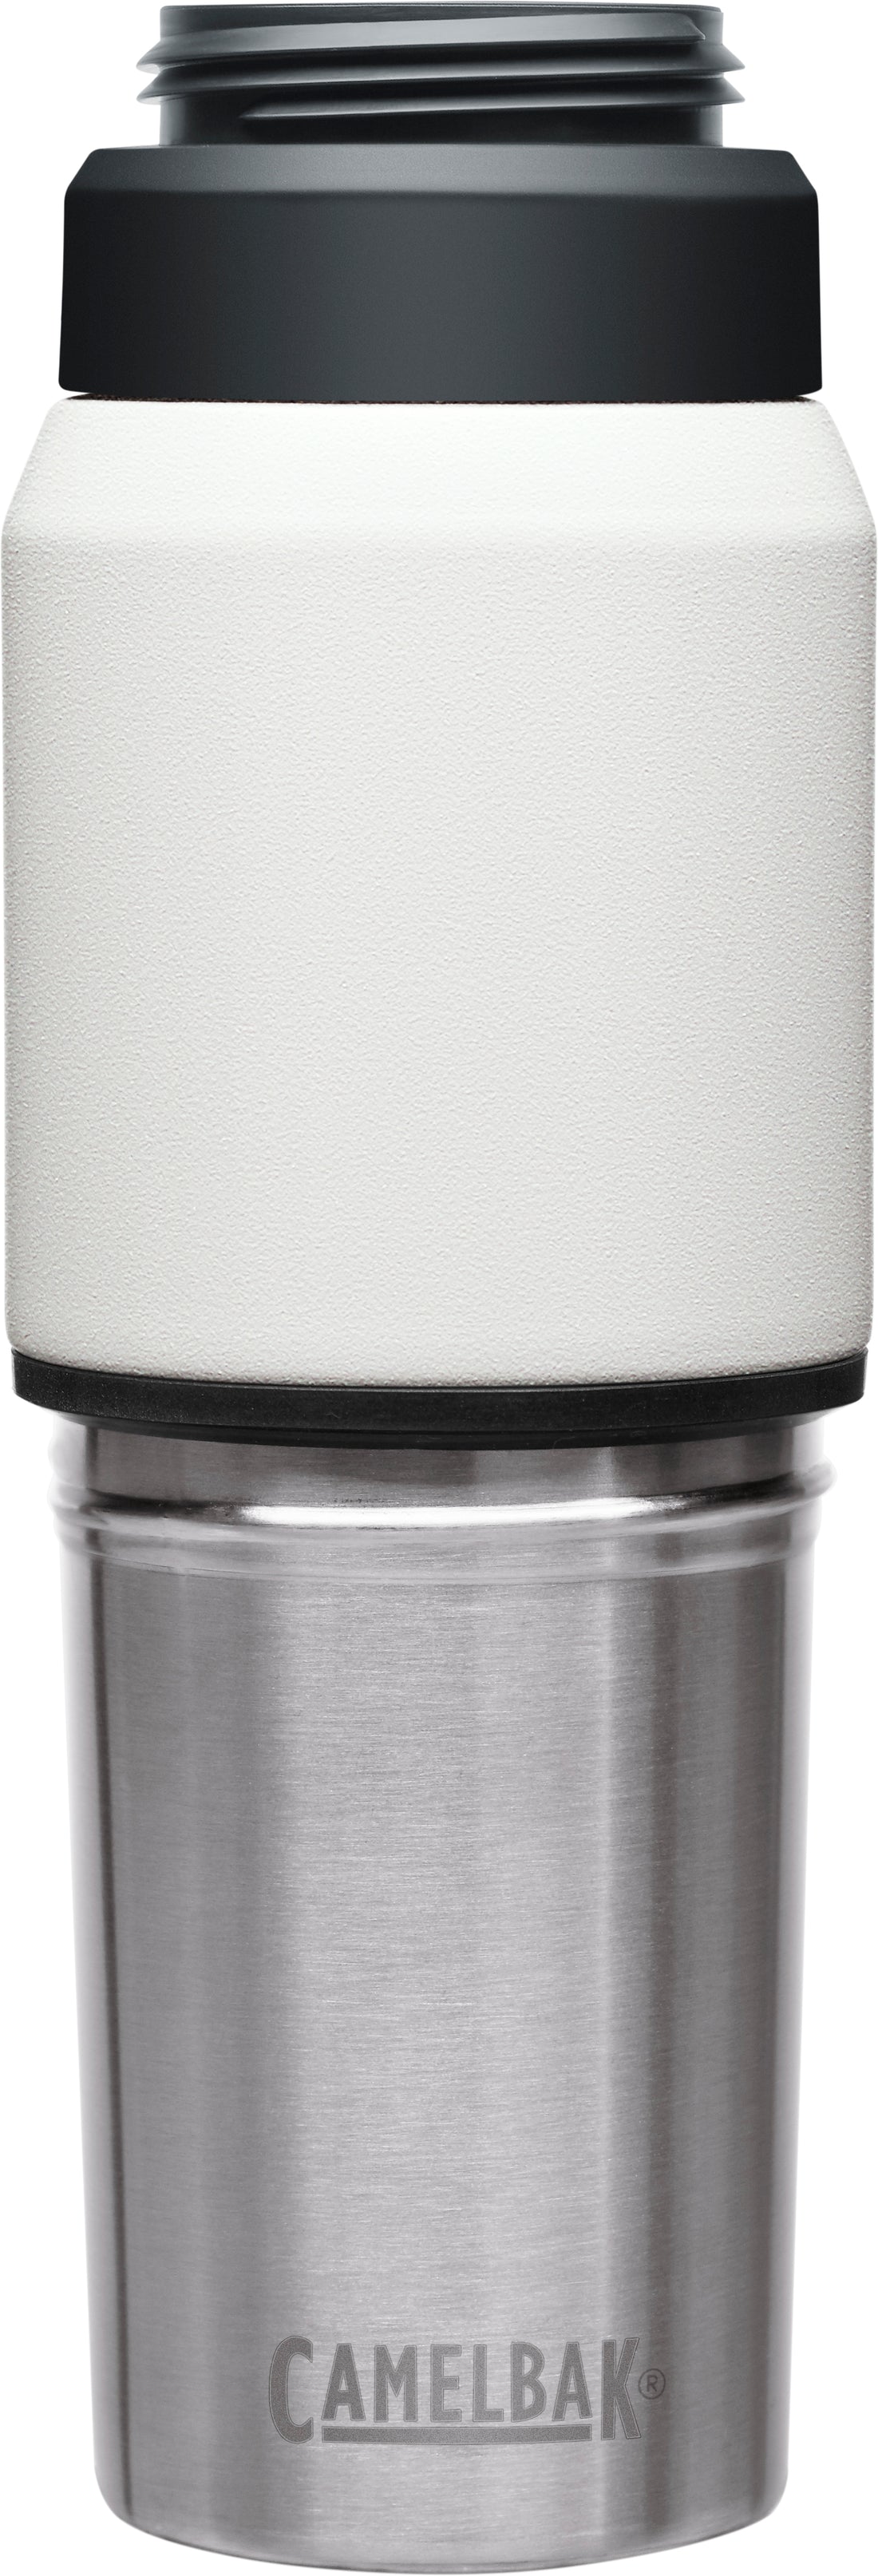 Camelbak MultiBev 17 oz Bottle / 12 oz Cup in White